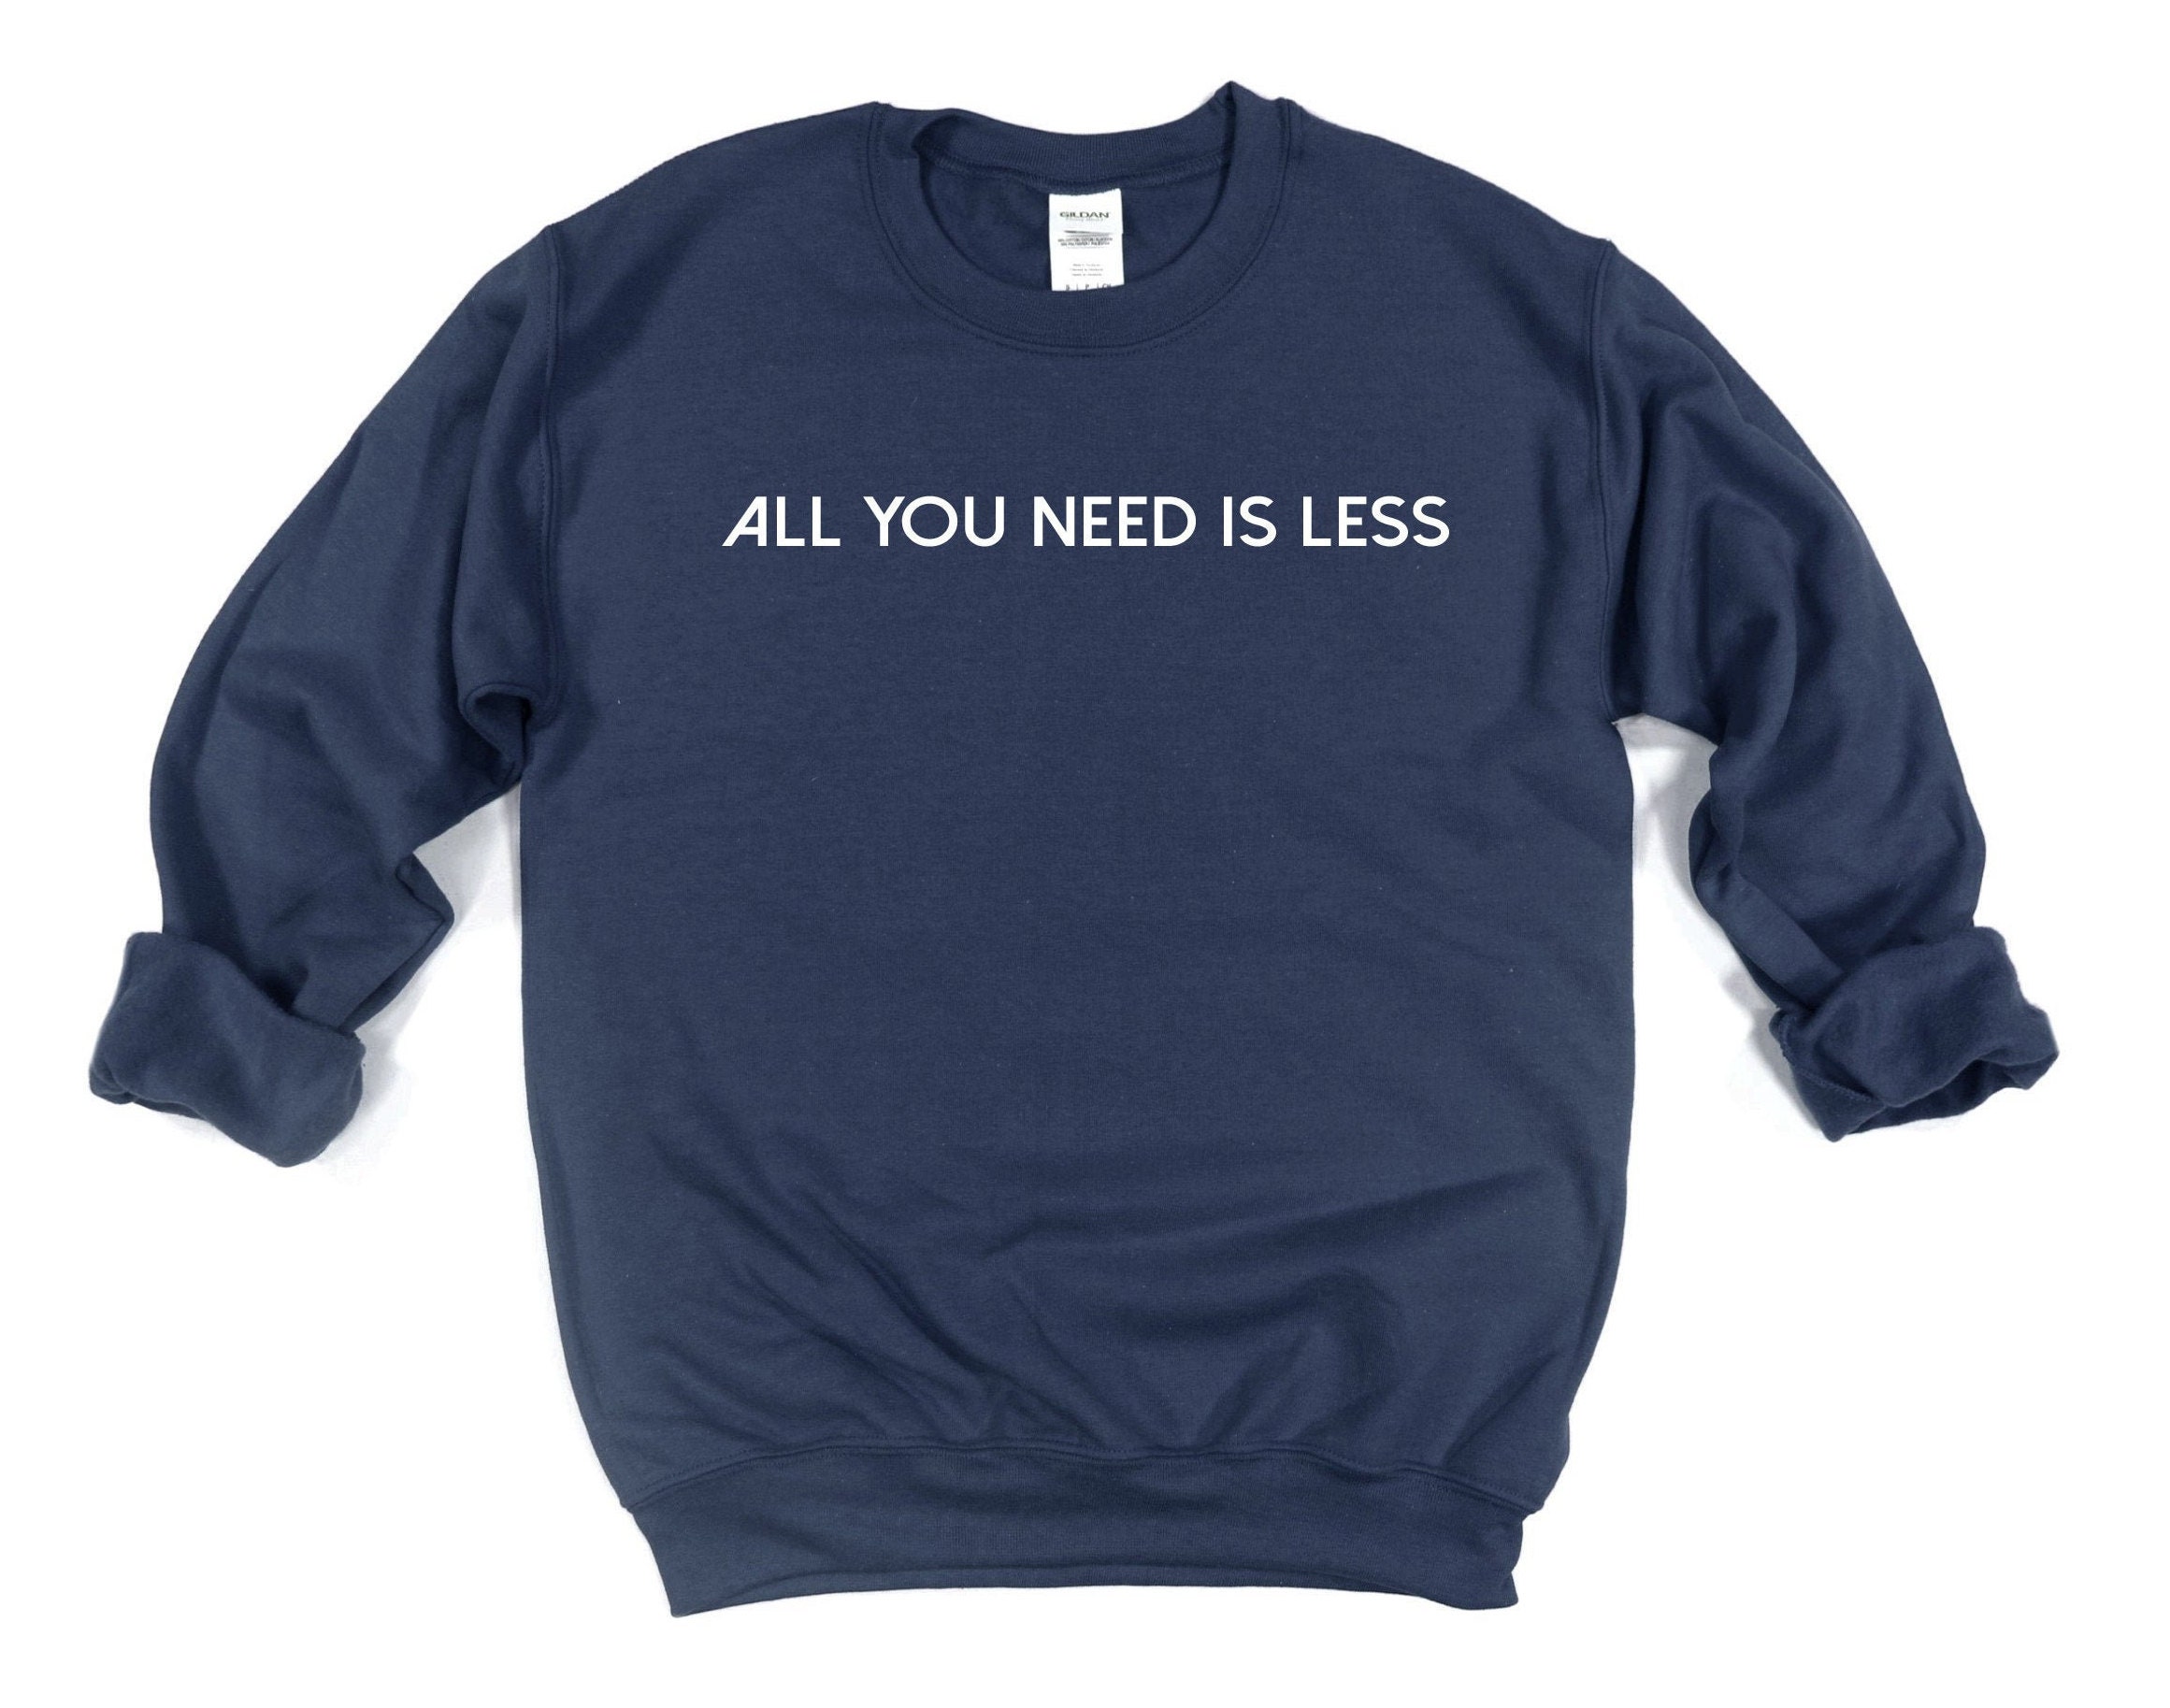 All you need is less T-shirt Sweatshirt minimalist shirt | Etsy